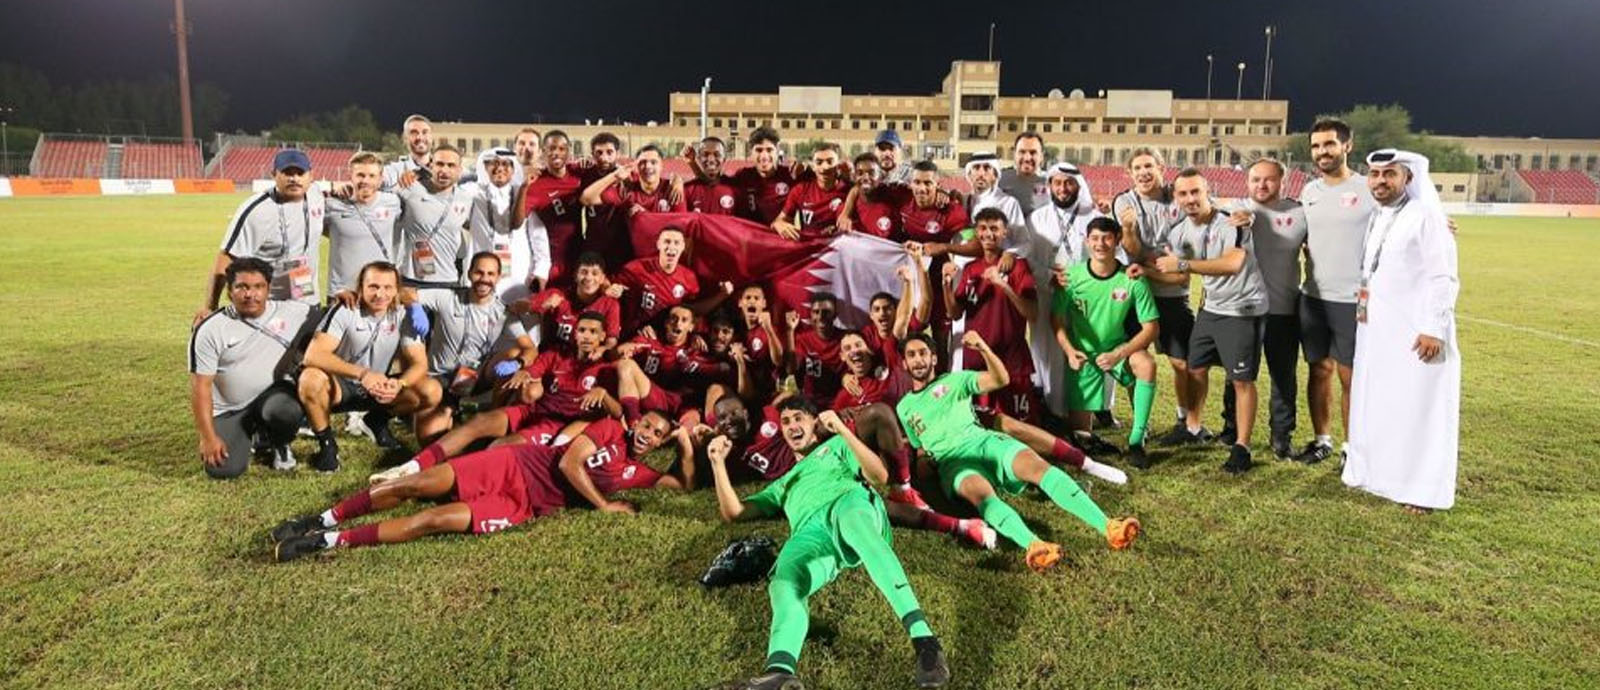 Qatar Squad